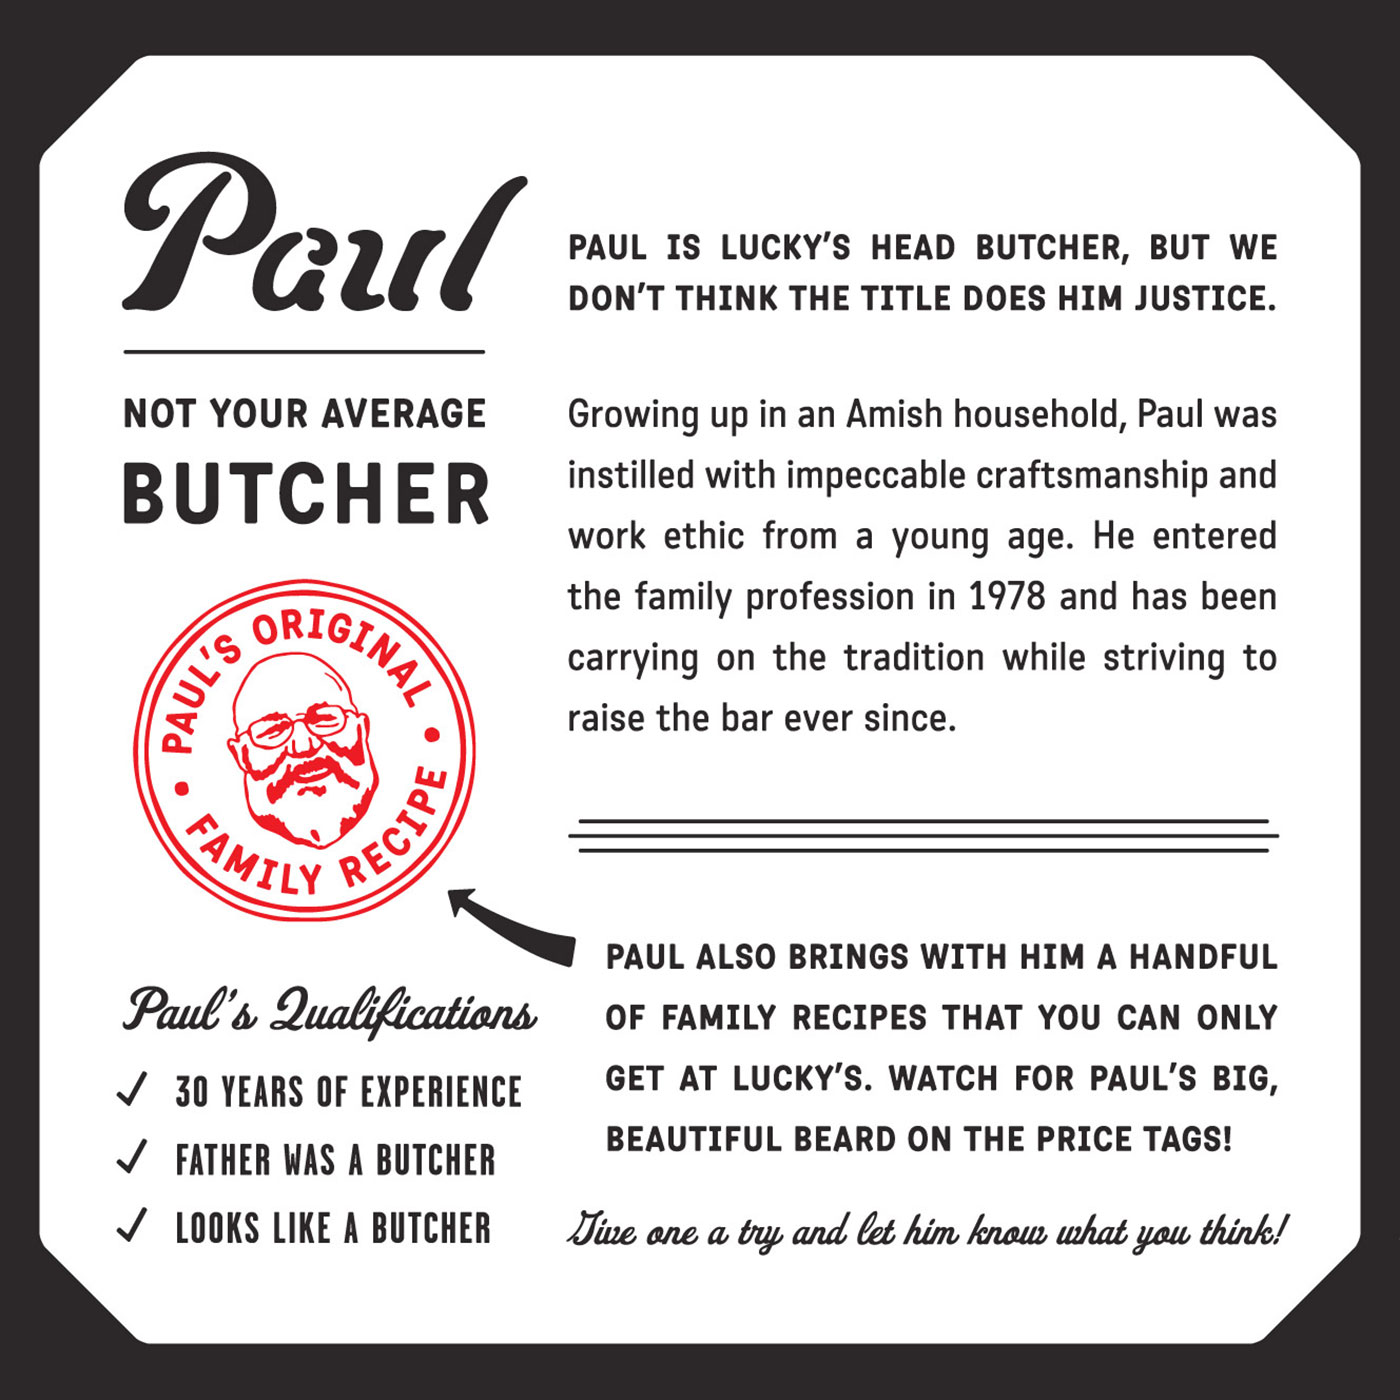 PAUL THE BUTCHER 标志及品牌视觉设计